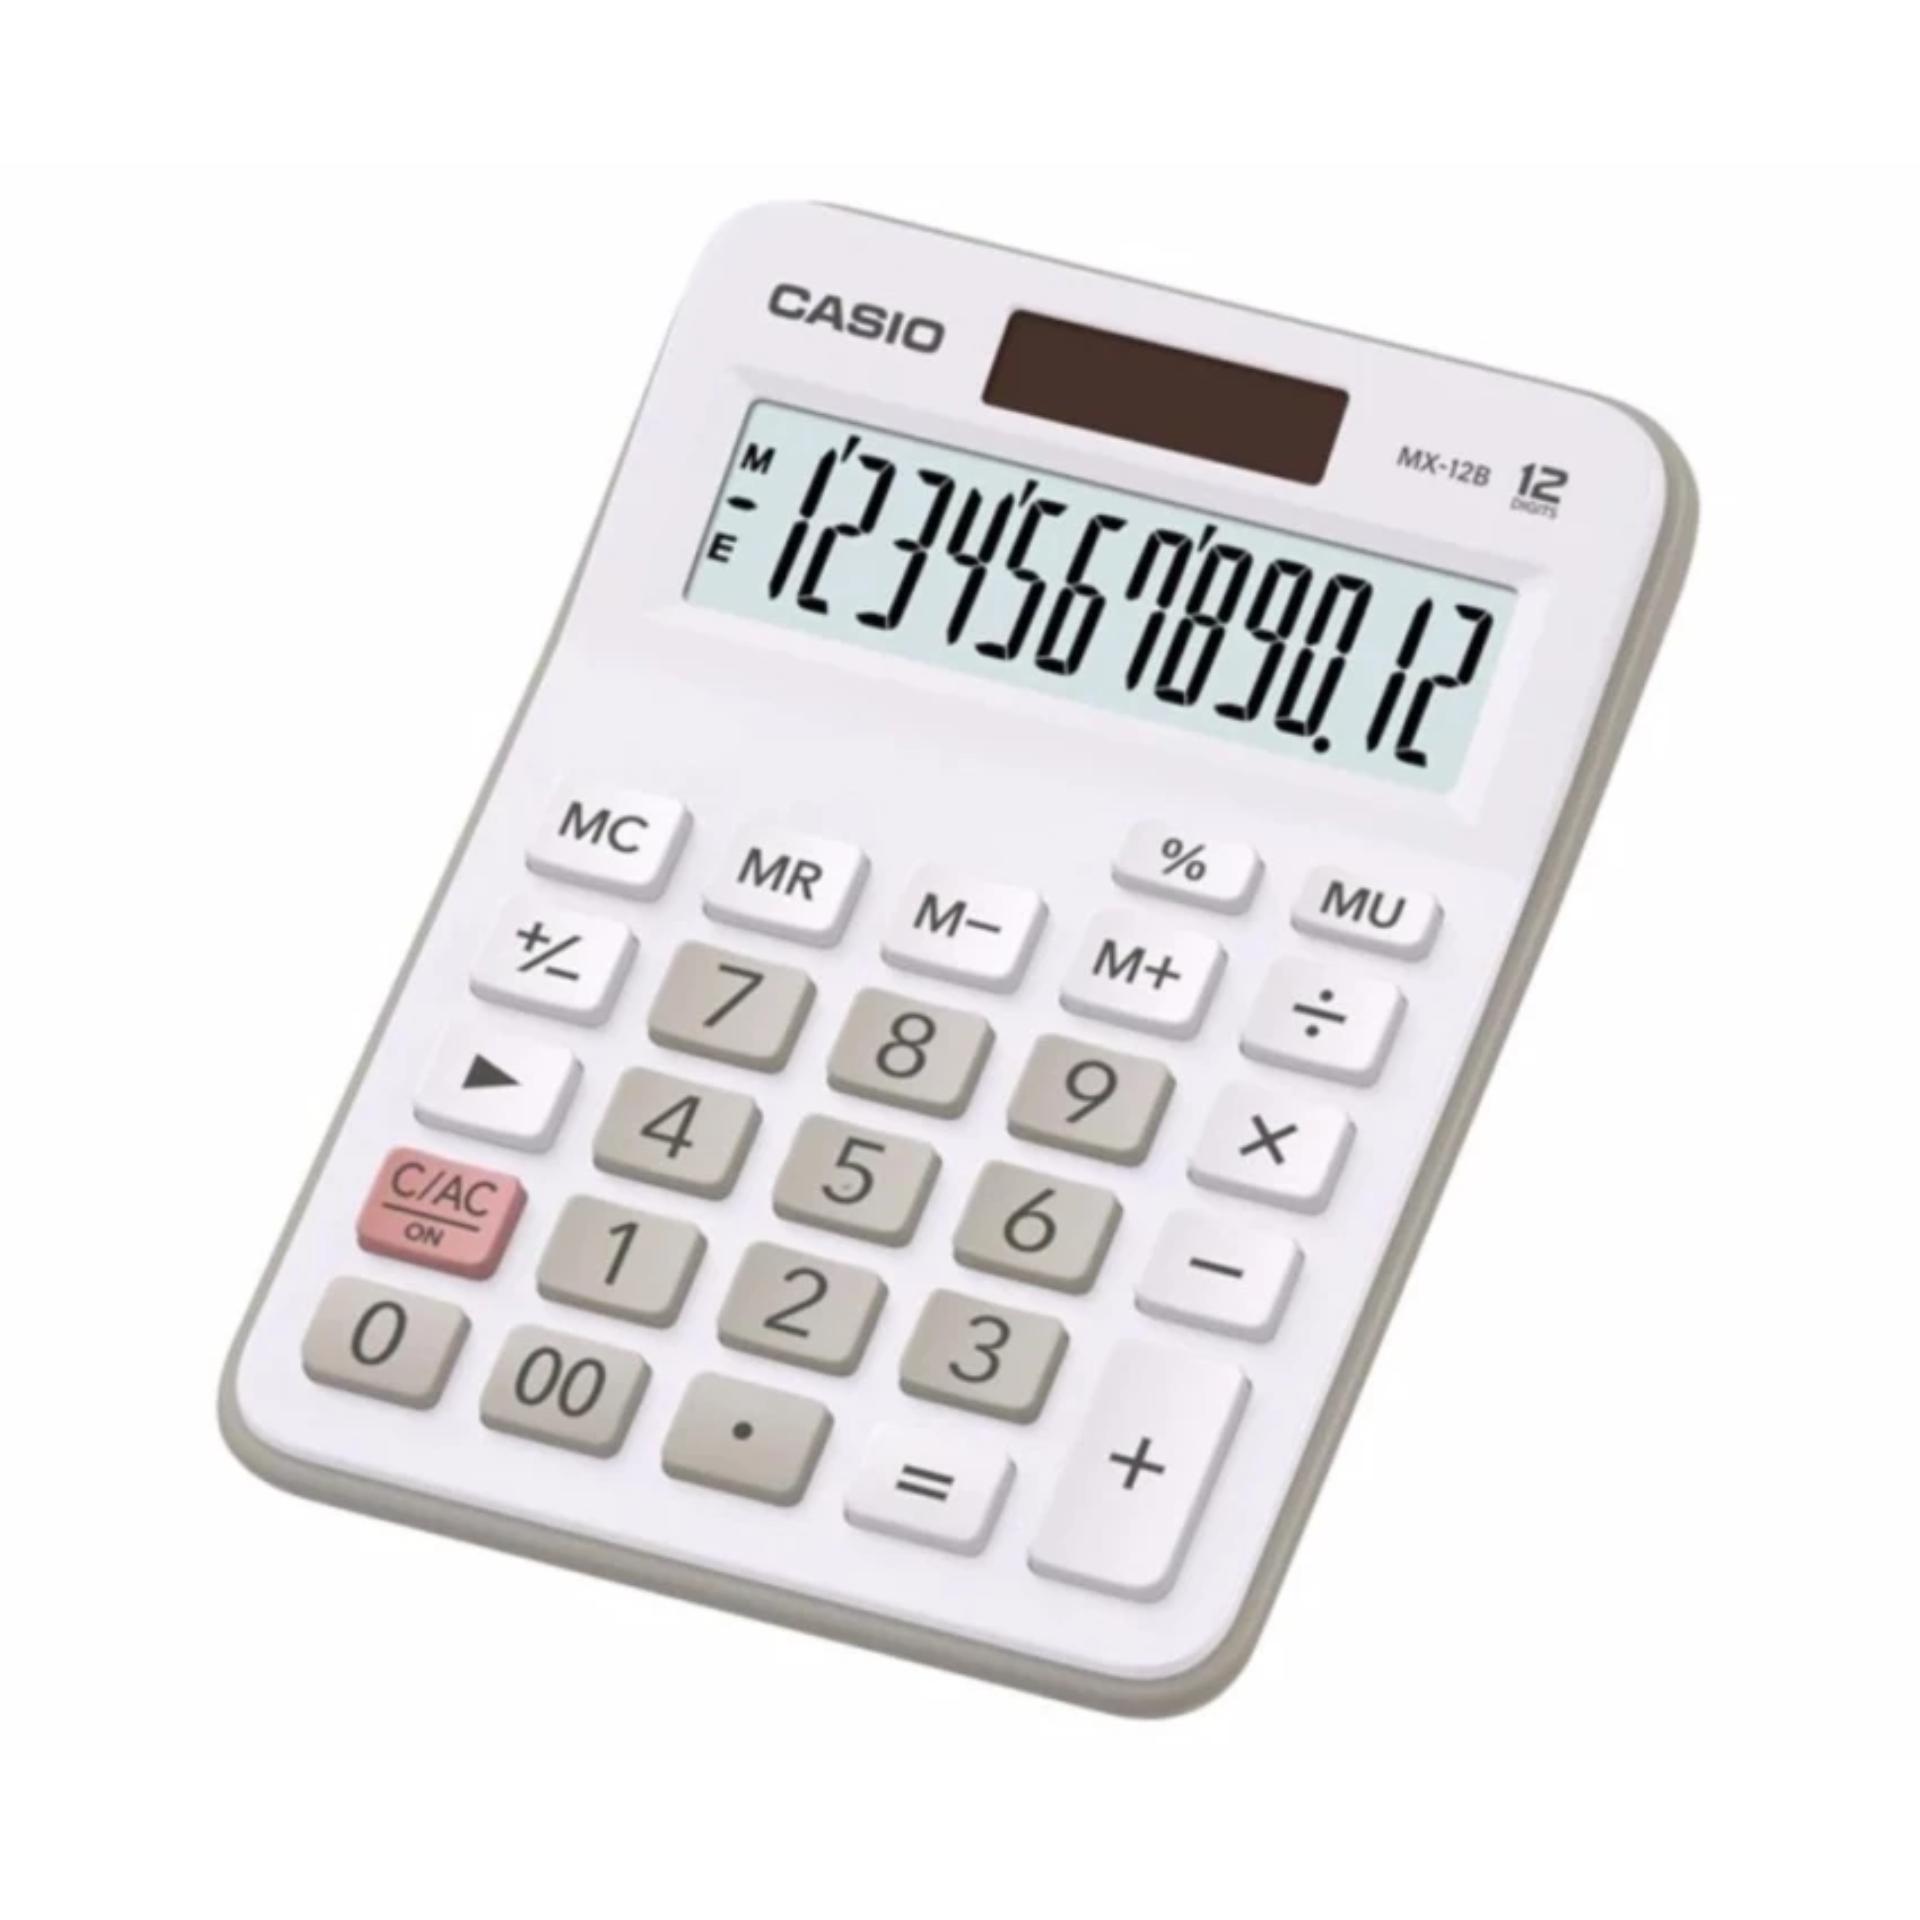 Casio Calculator MX-12B - White